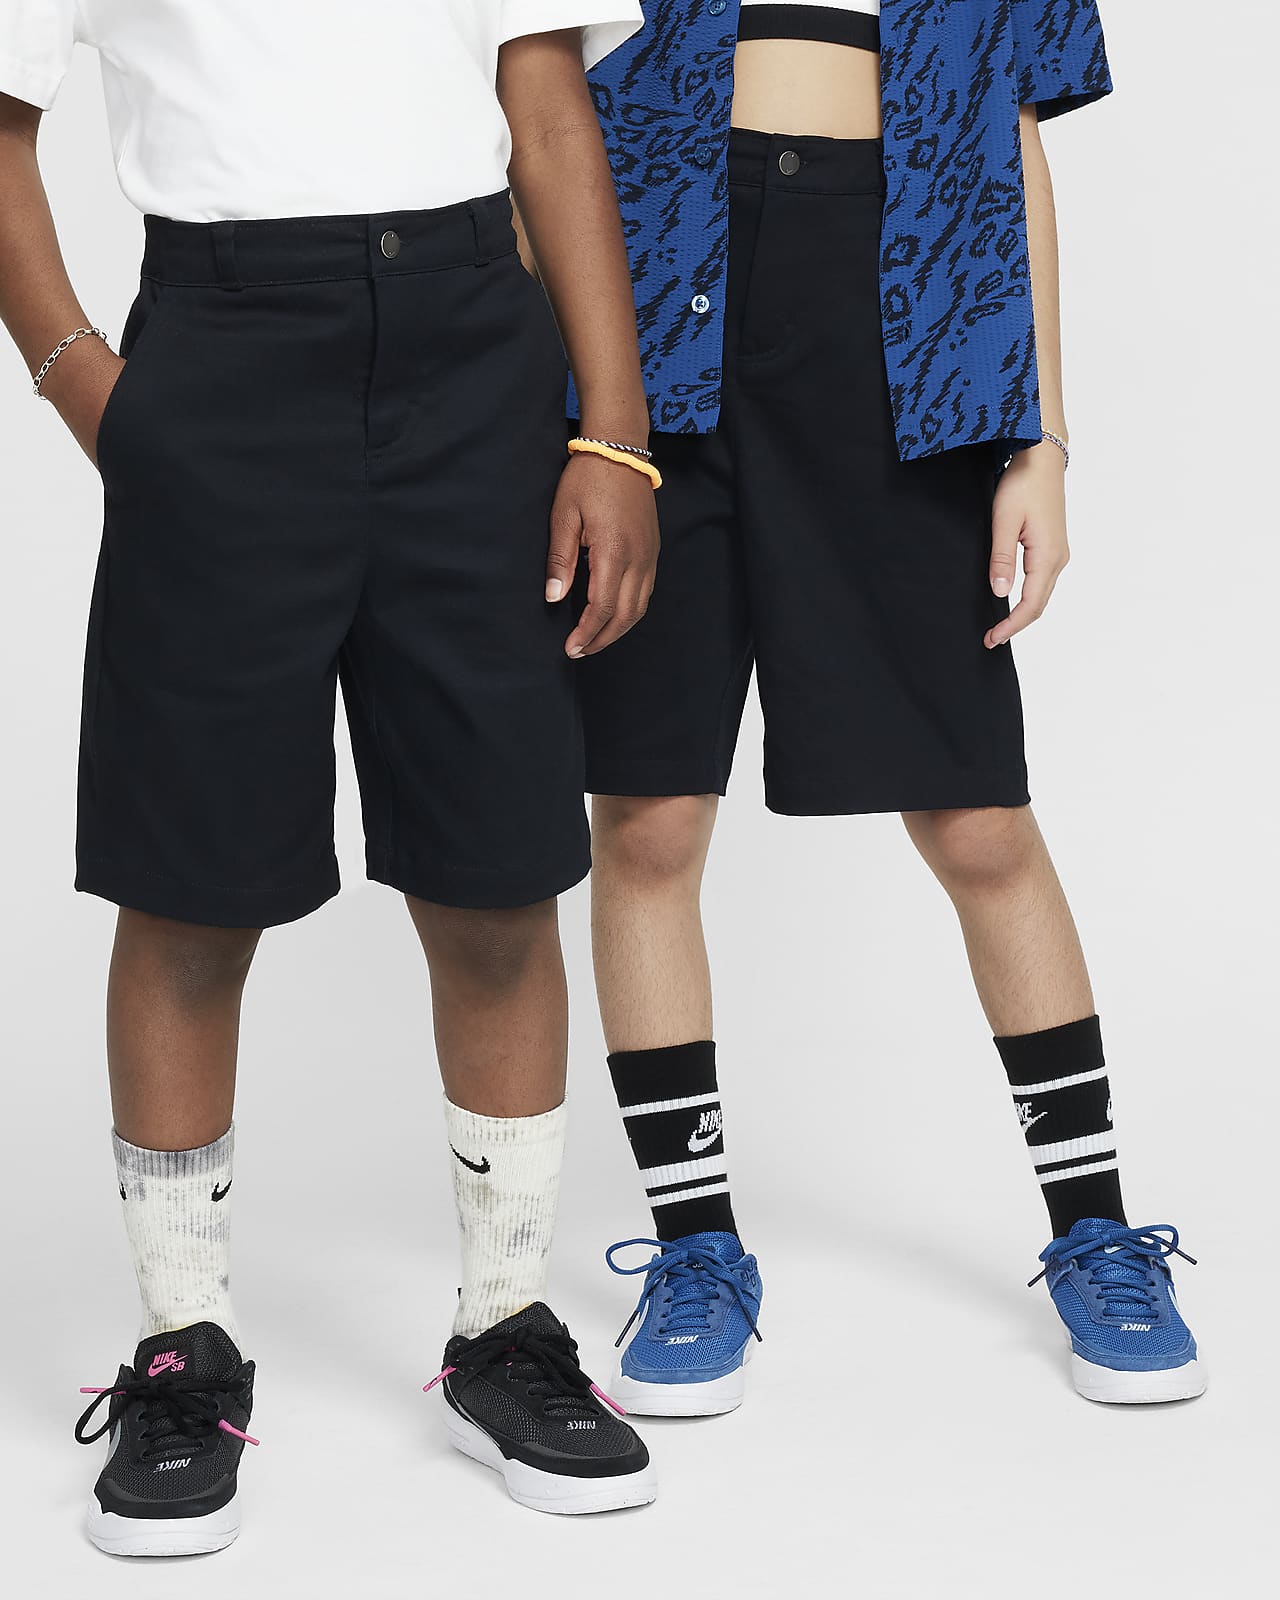 Nike SB Pantalons curts de skateboard xinos - Nen/a